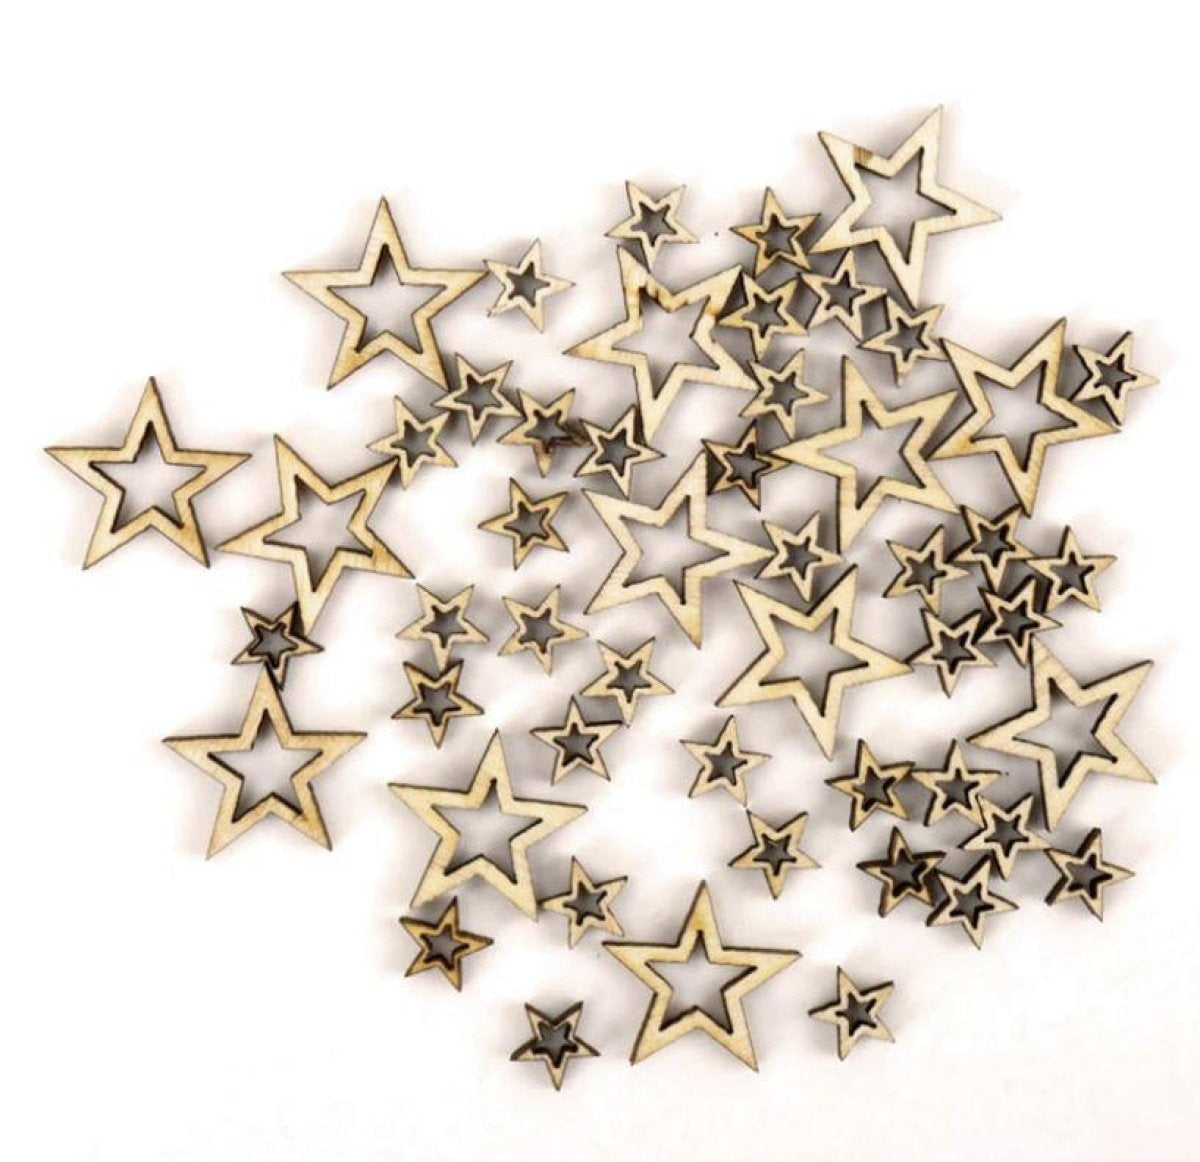 100pcs Wooden Stars Confetti 10-20mm Wood Crafts Decorations